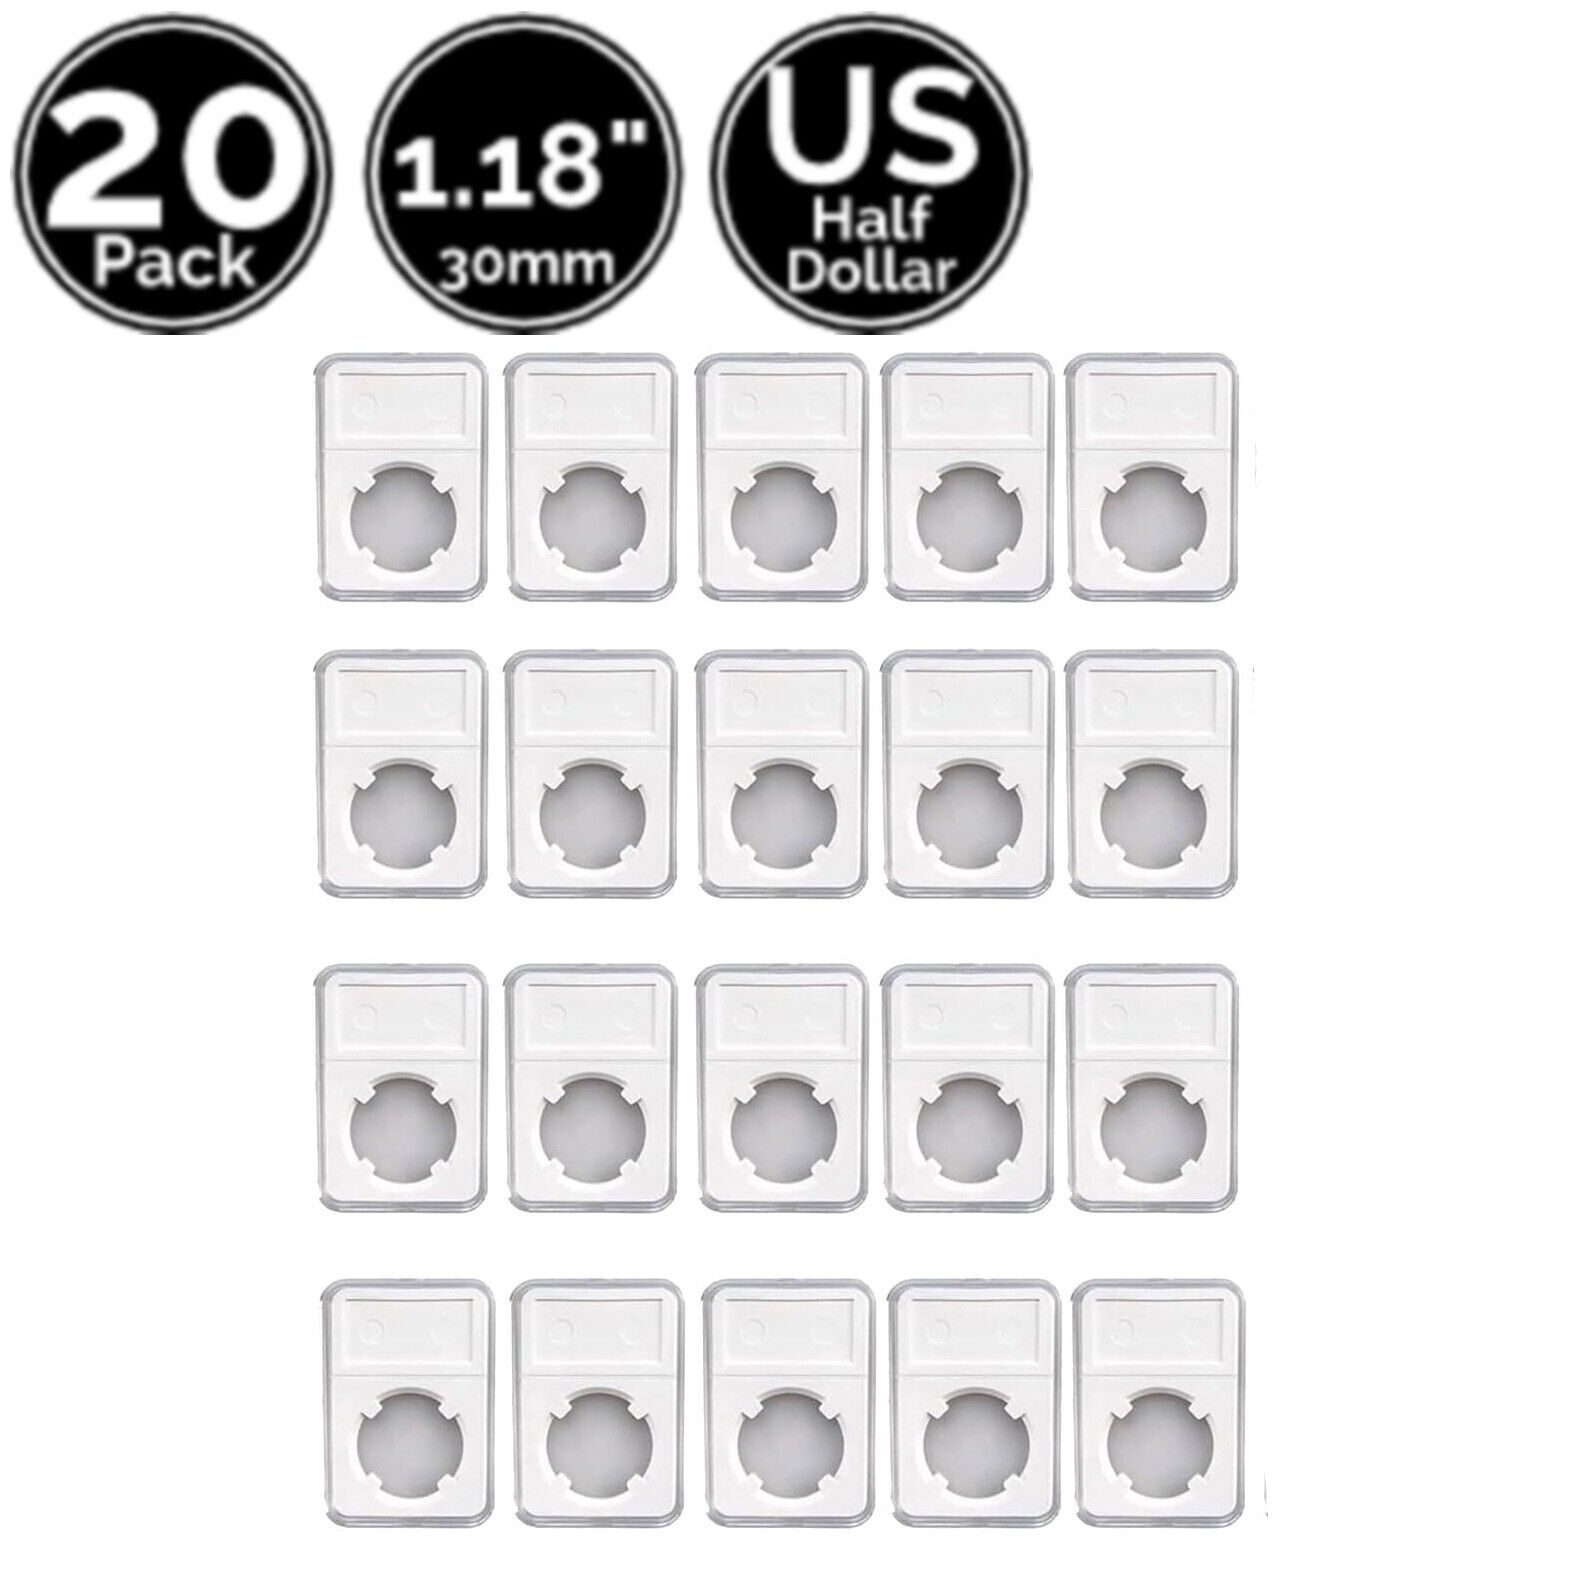 20 Pack 1.18 Inch 30 mm Slab Coin Display Holder Direct Fit For US Half Dollar